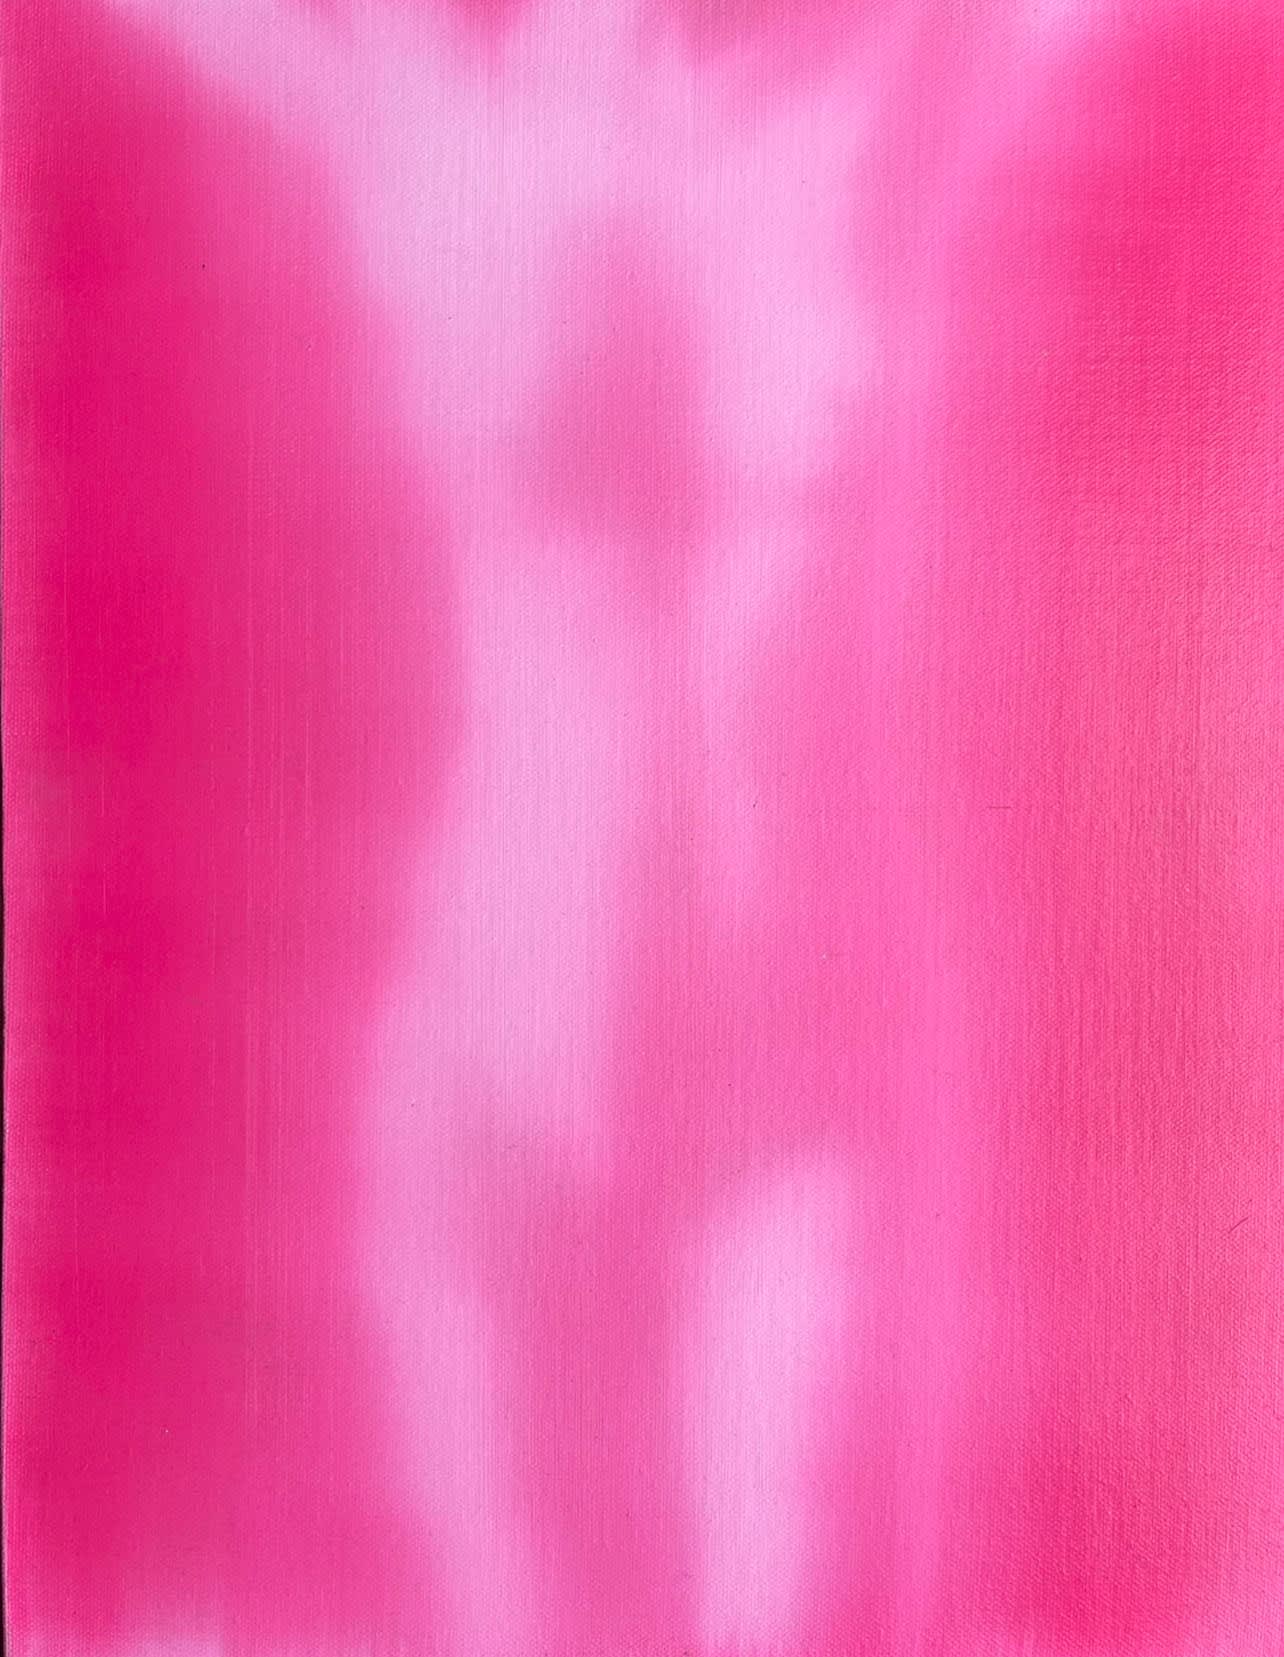 Alison Van Pelt Pink Nude 2020 Casterline Goodman Gallery